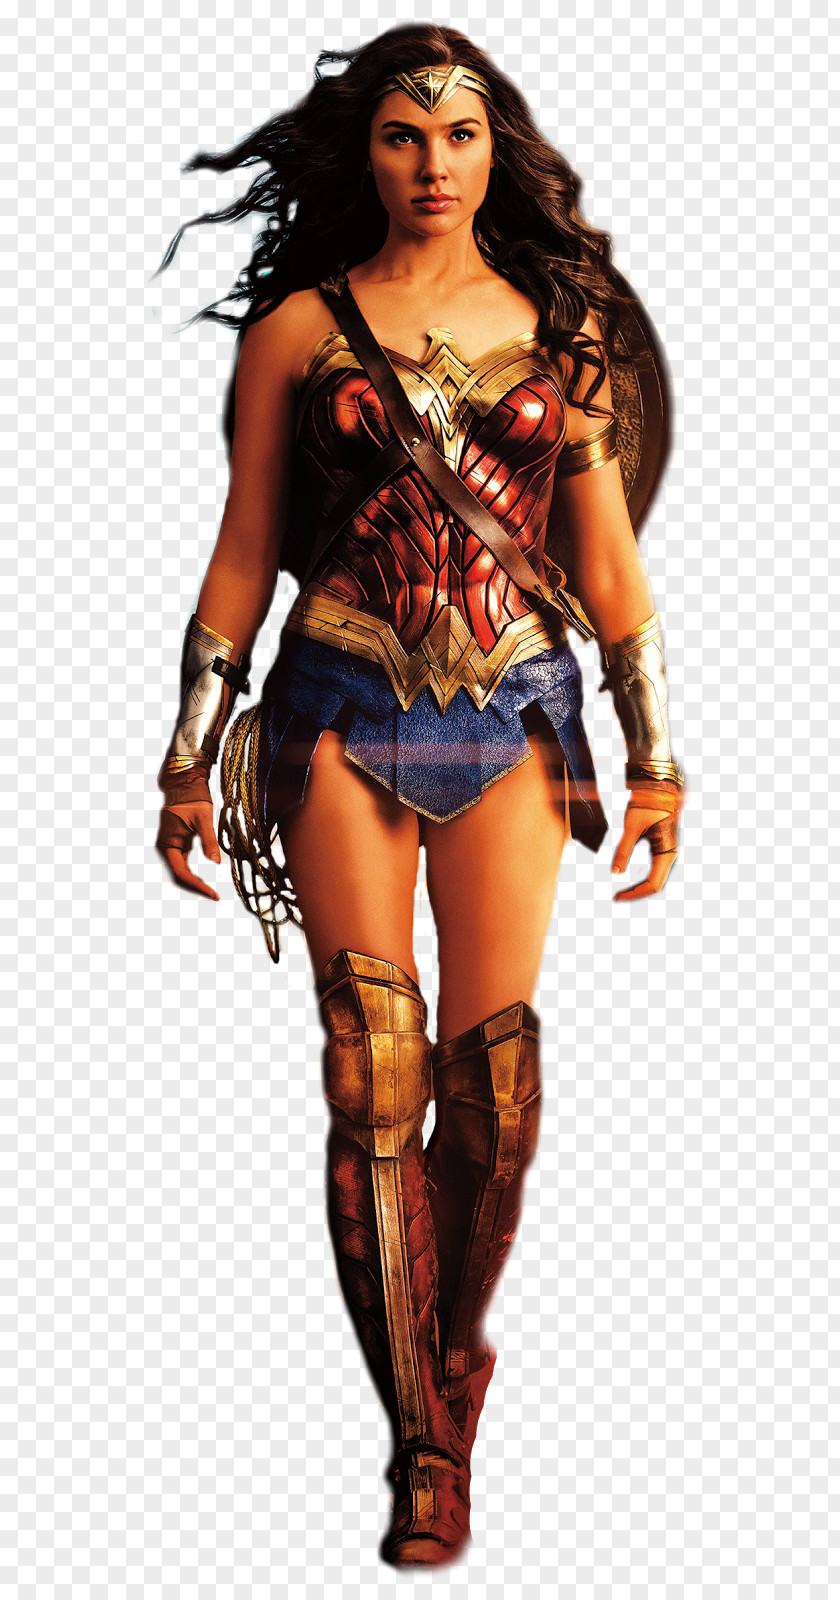 Gal Gadot Diana Prince Wonder Woman Female Superhero Movie PNG